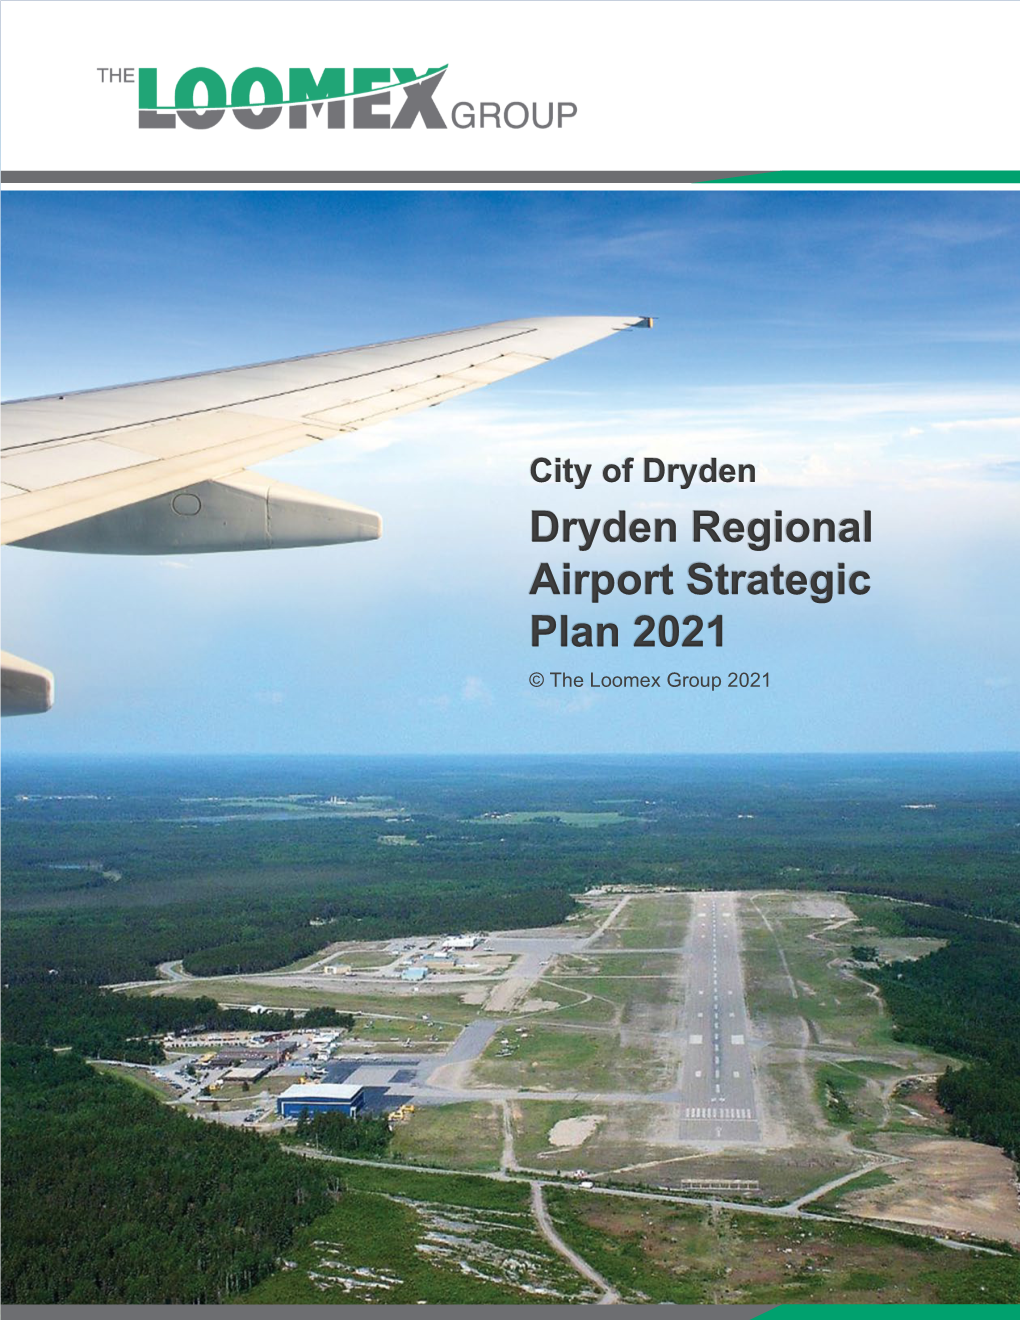 Dryden Regional Airport Strategic Plan 2021 © the Loomex Group 2021